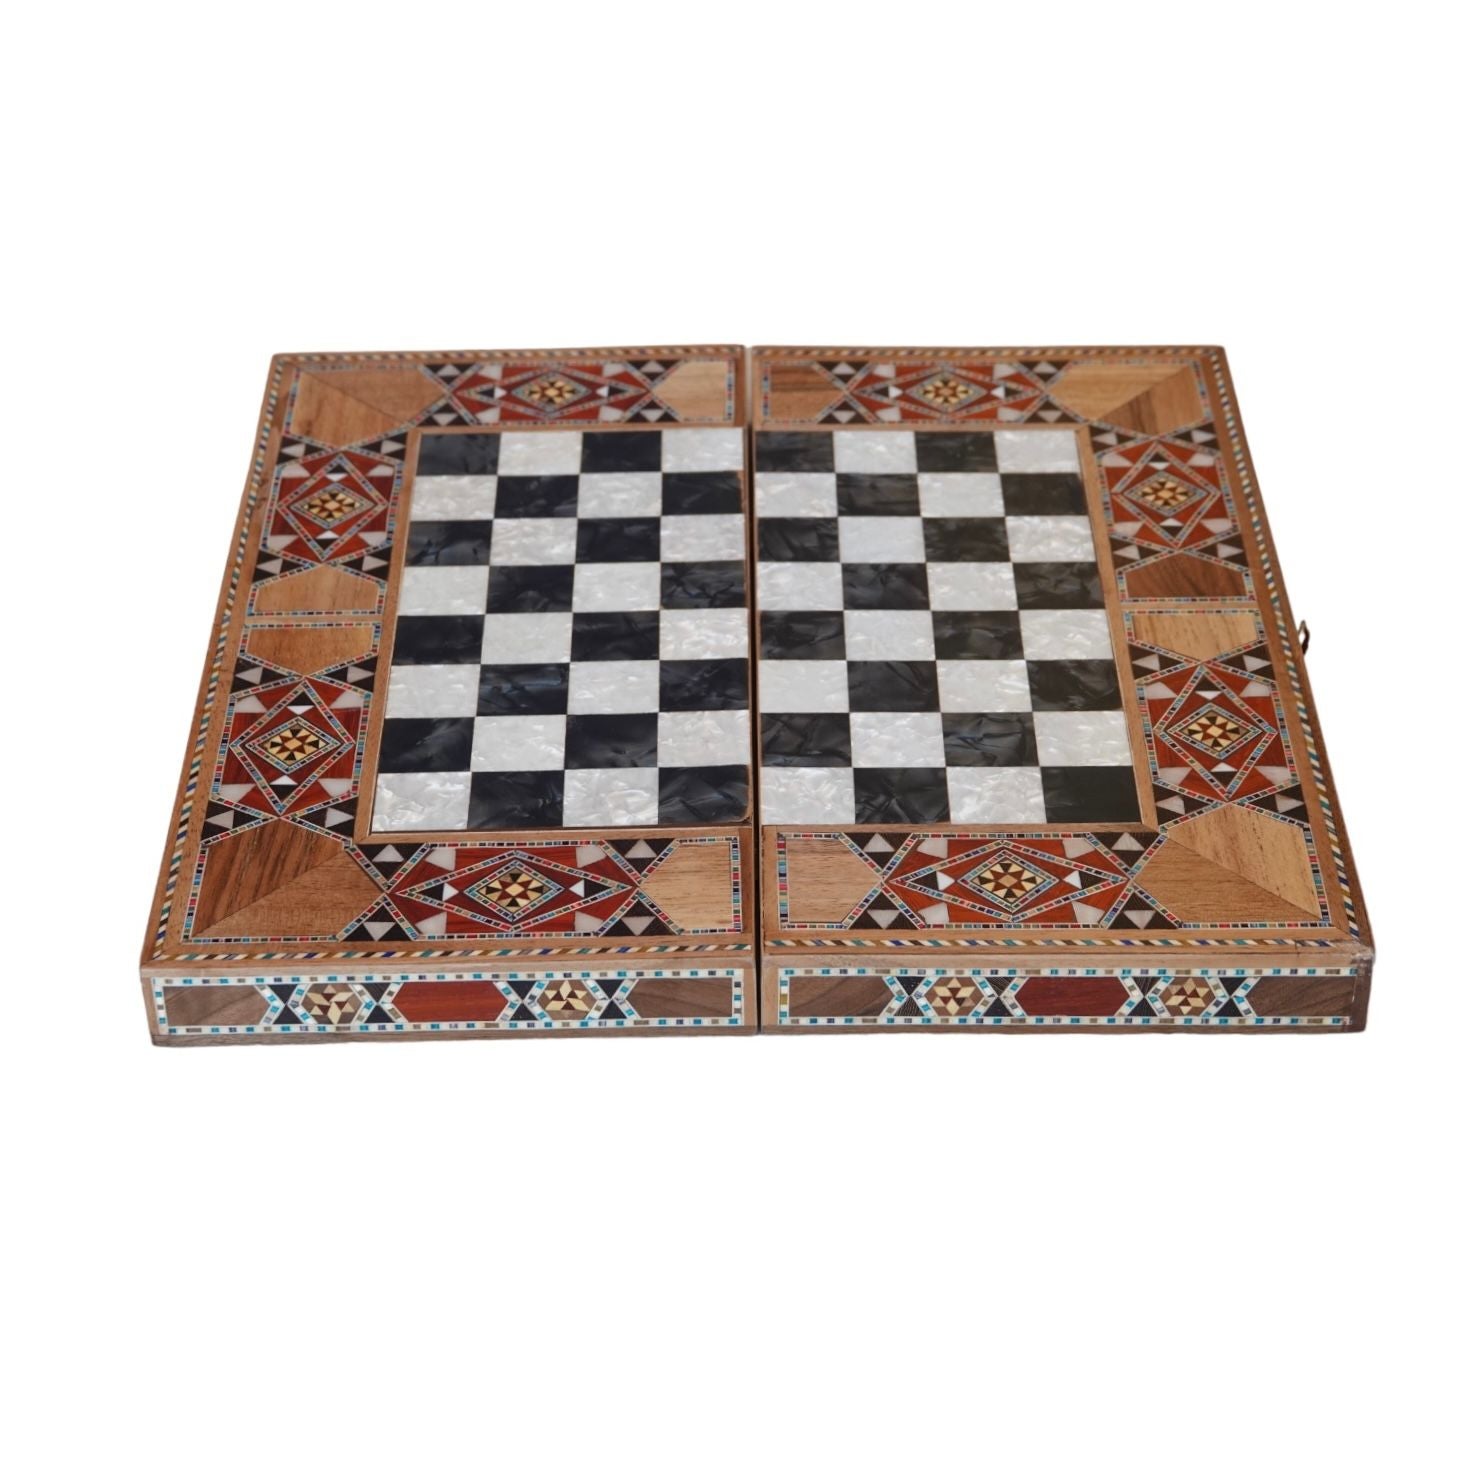 Woodart Chess & Backgammon Set (34 x 34cm)